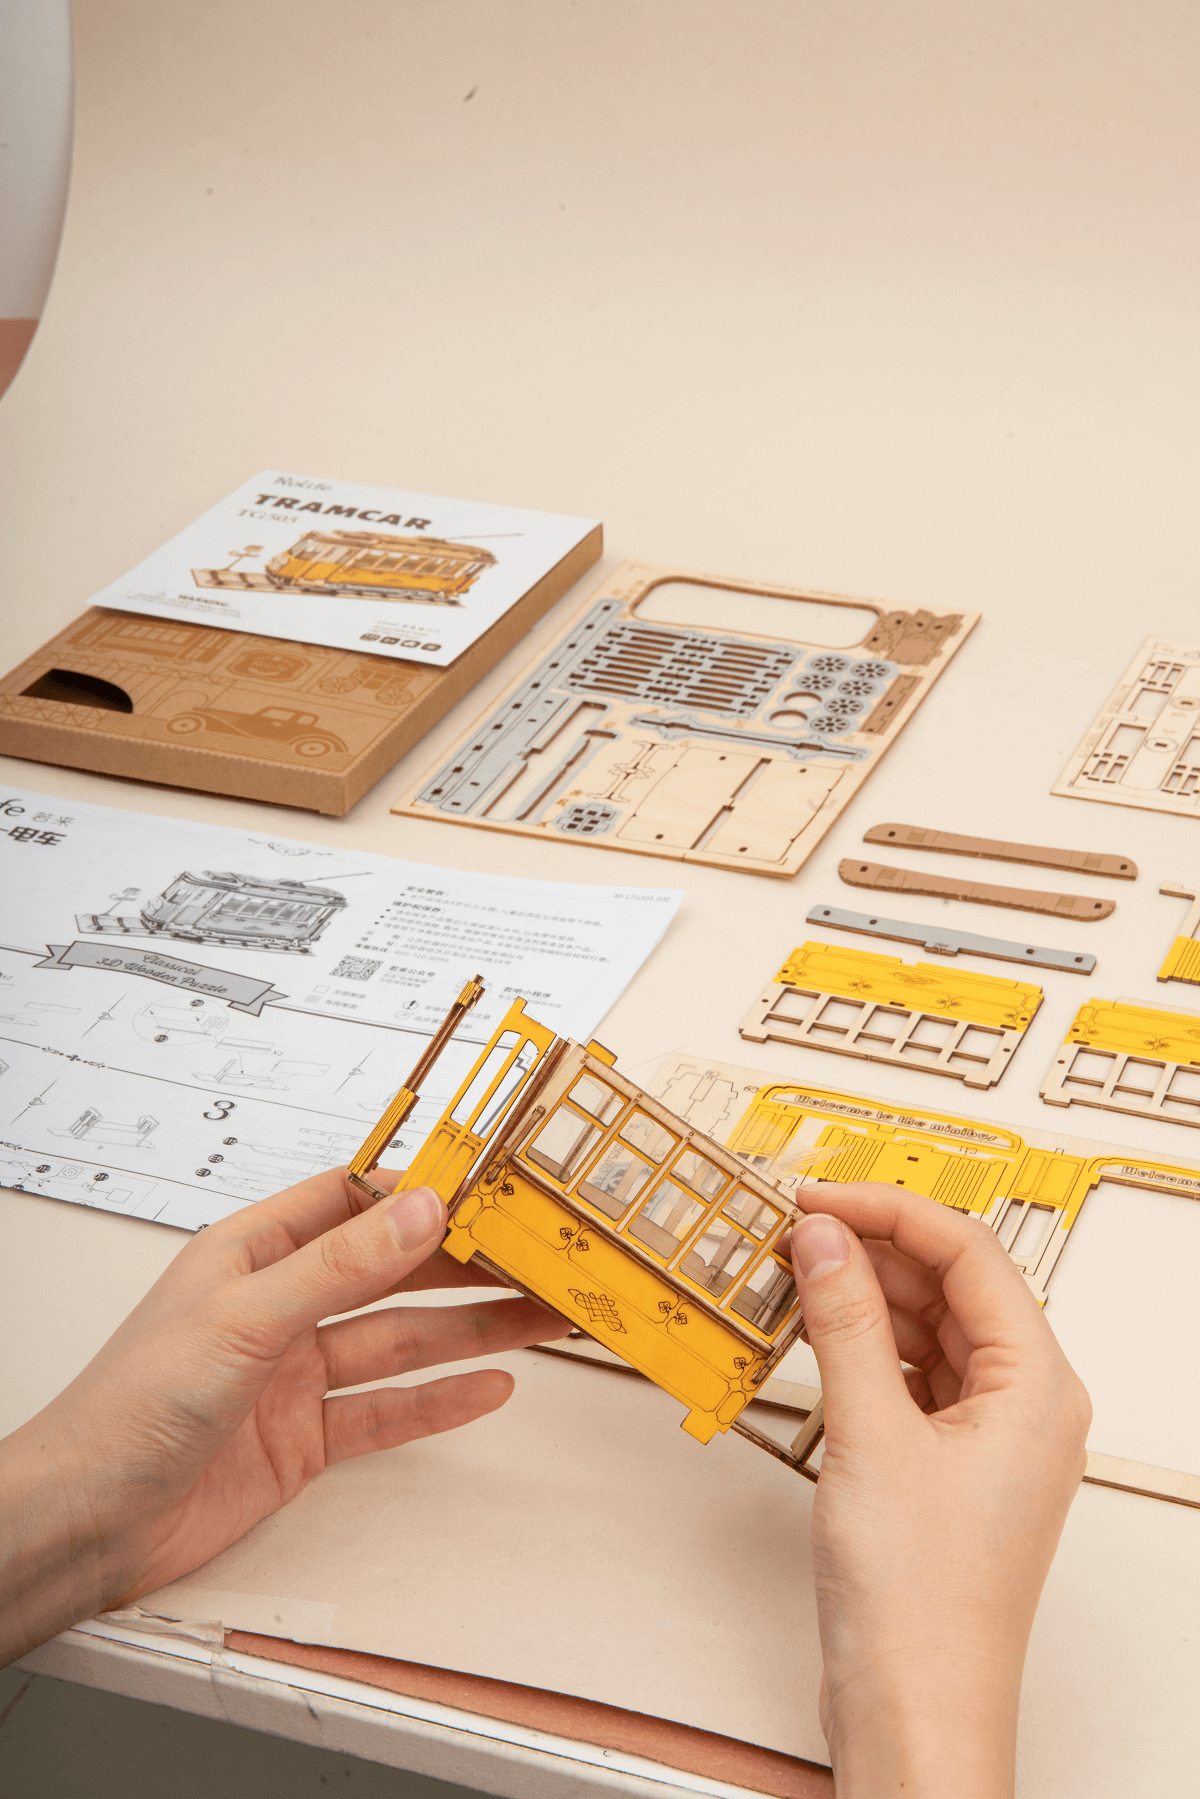 Rompecabezas de madera del tranvía de la vendimia 3D: Kit modelo único de-KidsToyLover